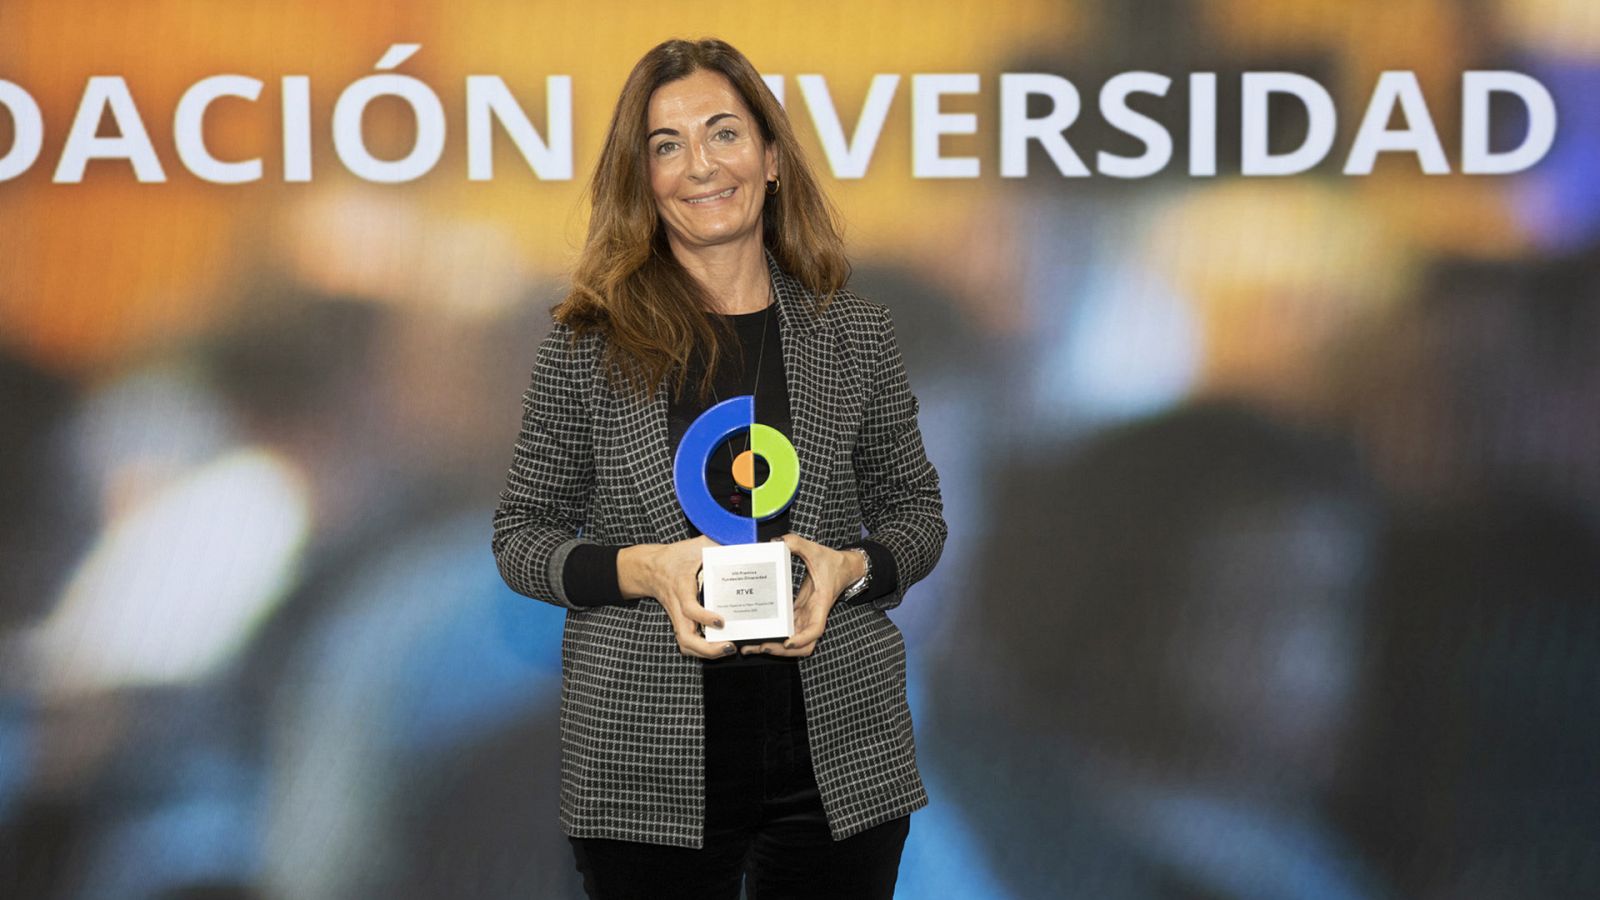 Marta Torralvo, directora corporativa de RTVE, recogiendo el premio